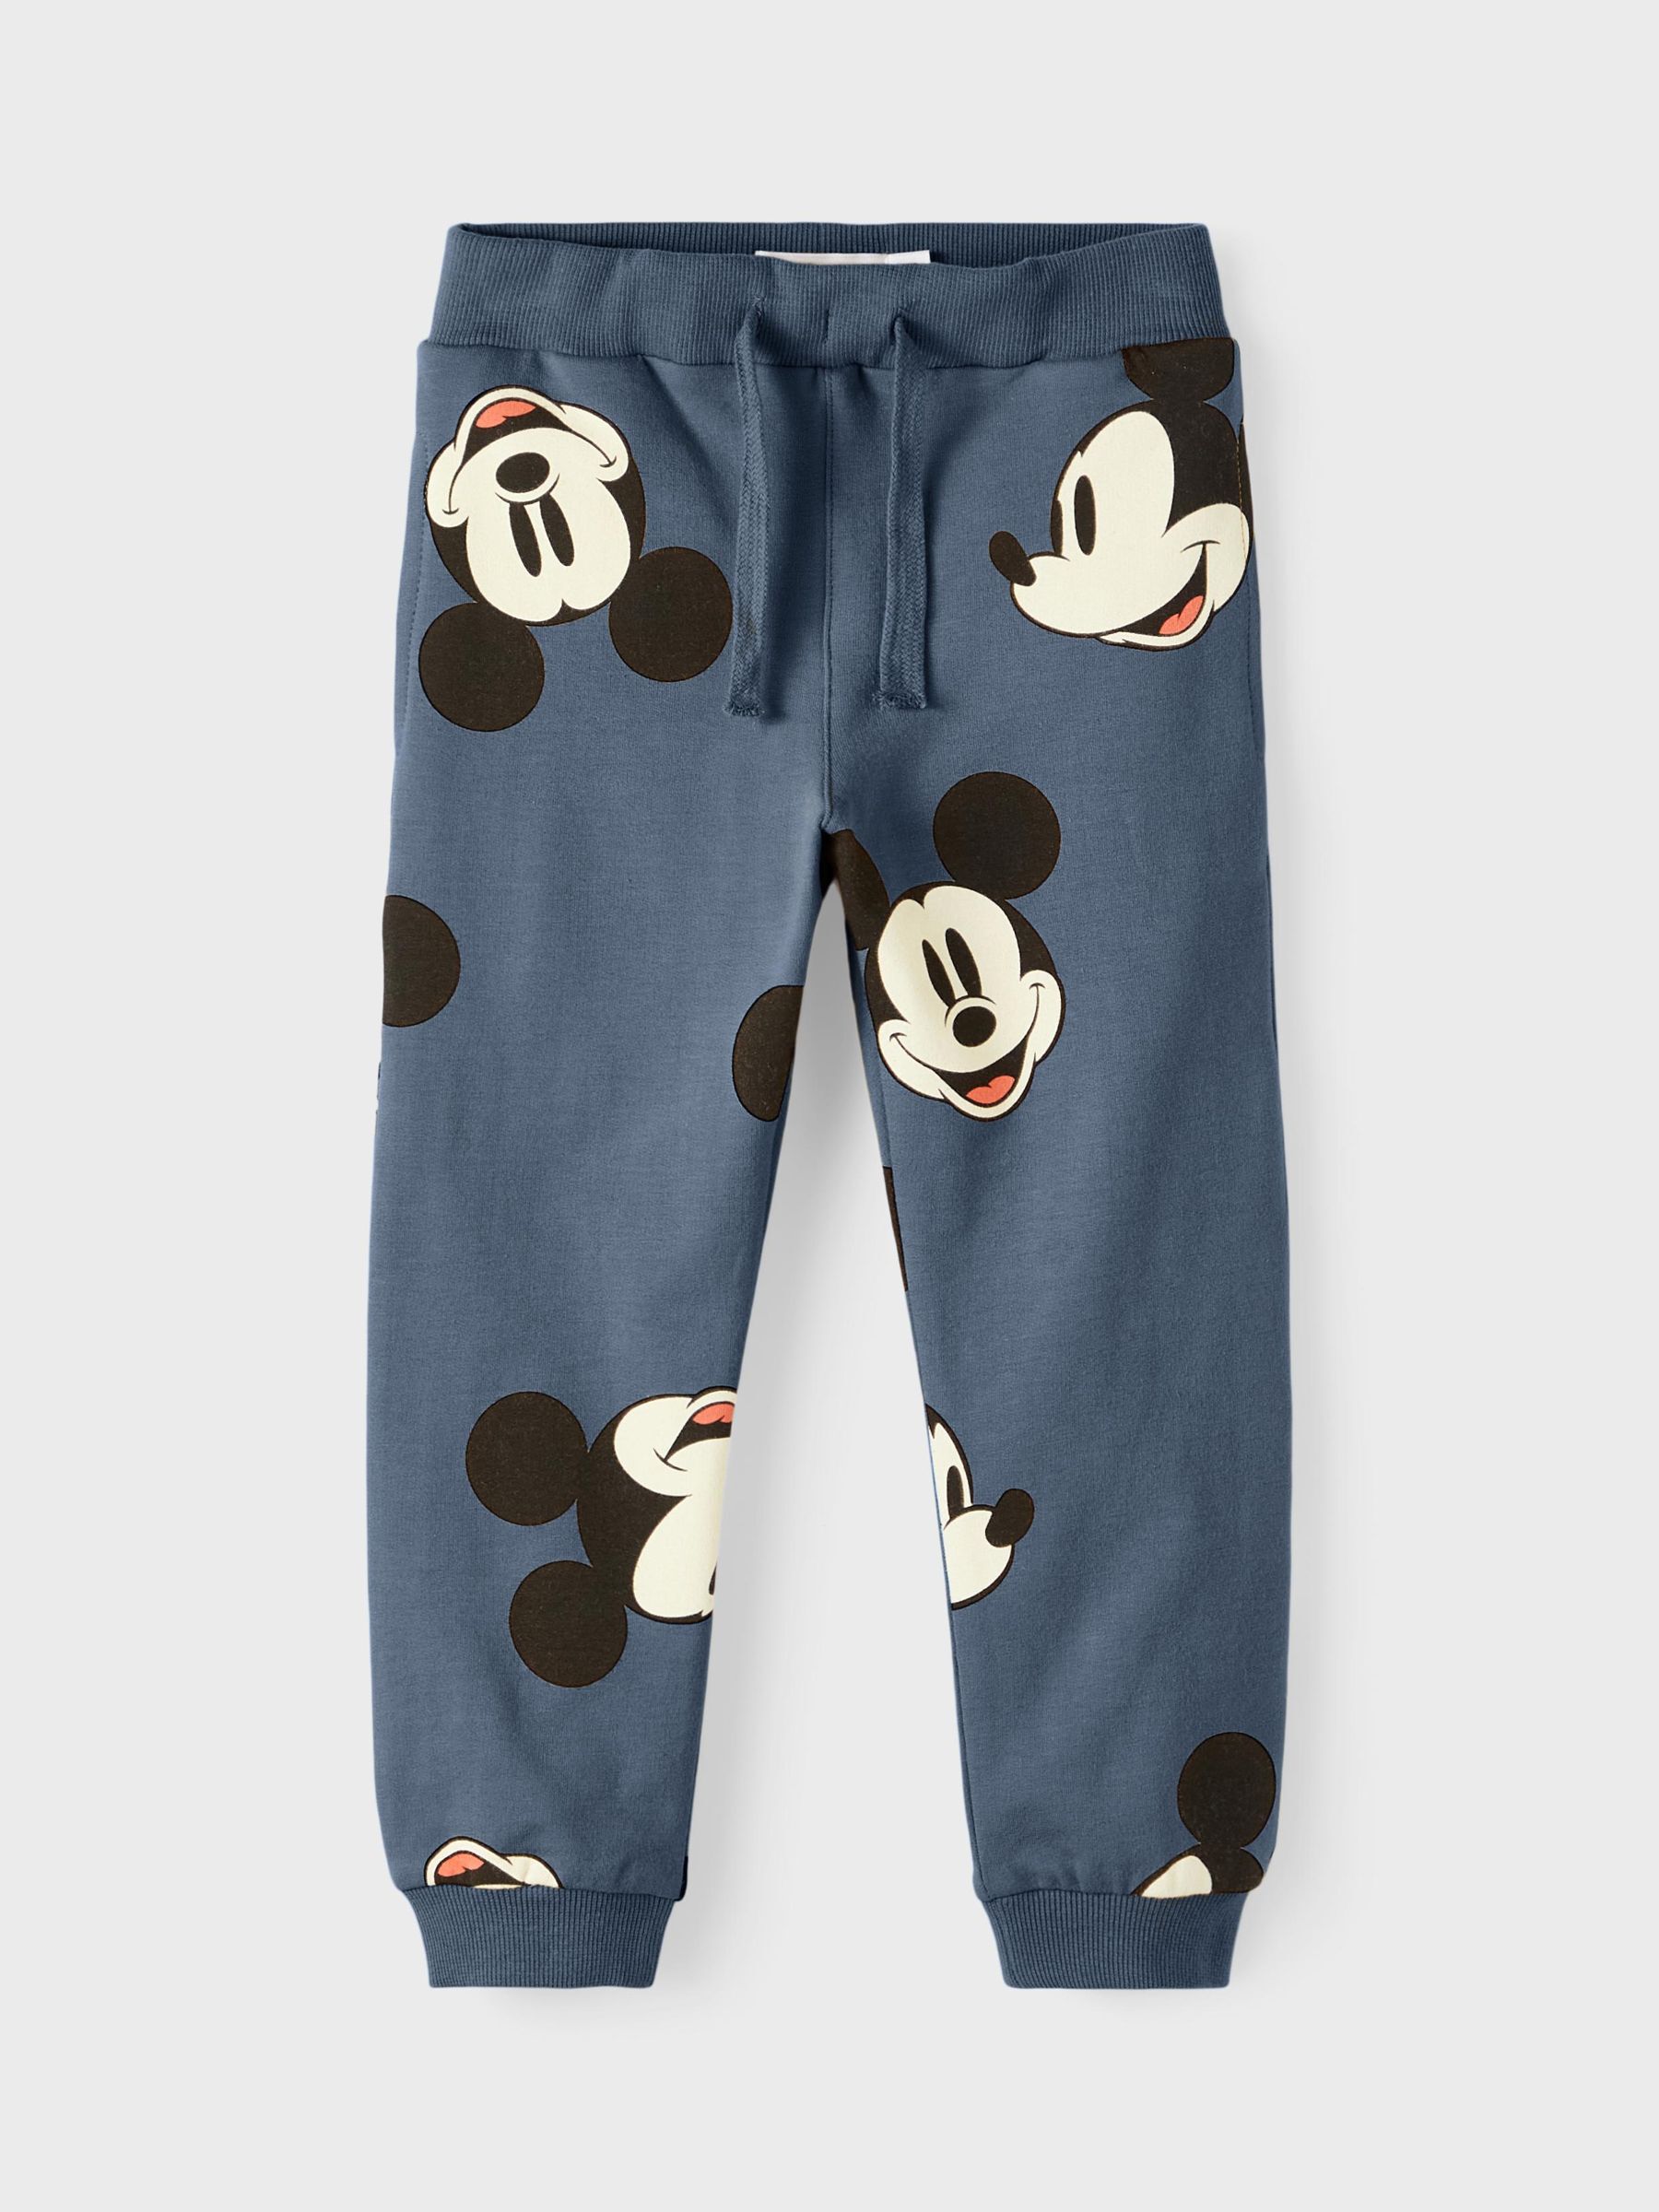 Pantalones Cortos De Mickey Mouse Bermudas Niño De Algodon Disney Pantalon Chandal Niño Ropa Niño para Regalo 